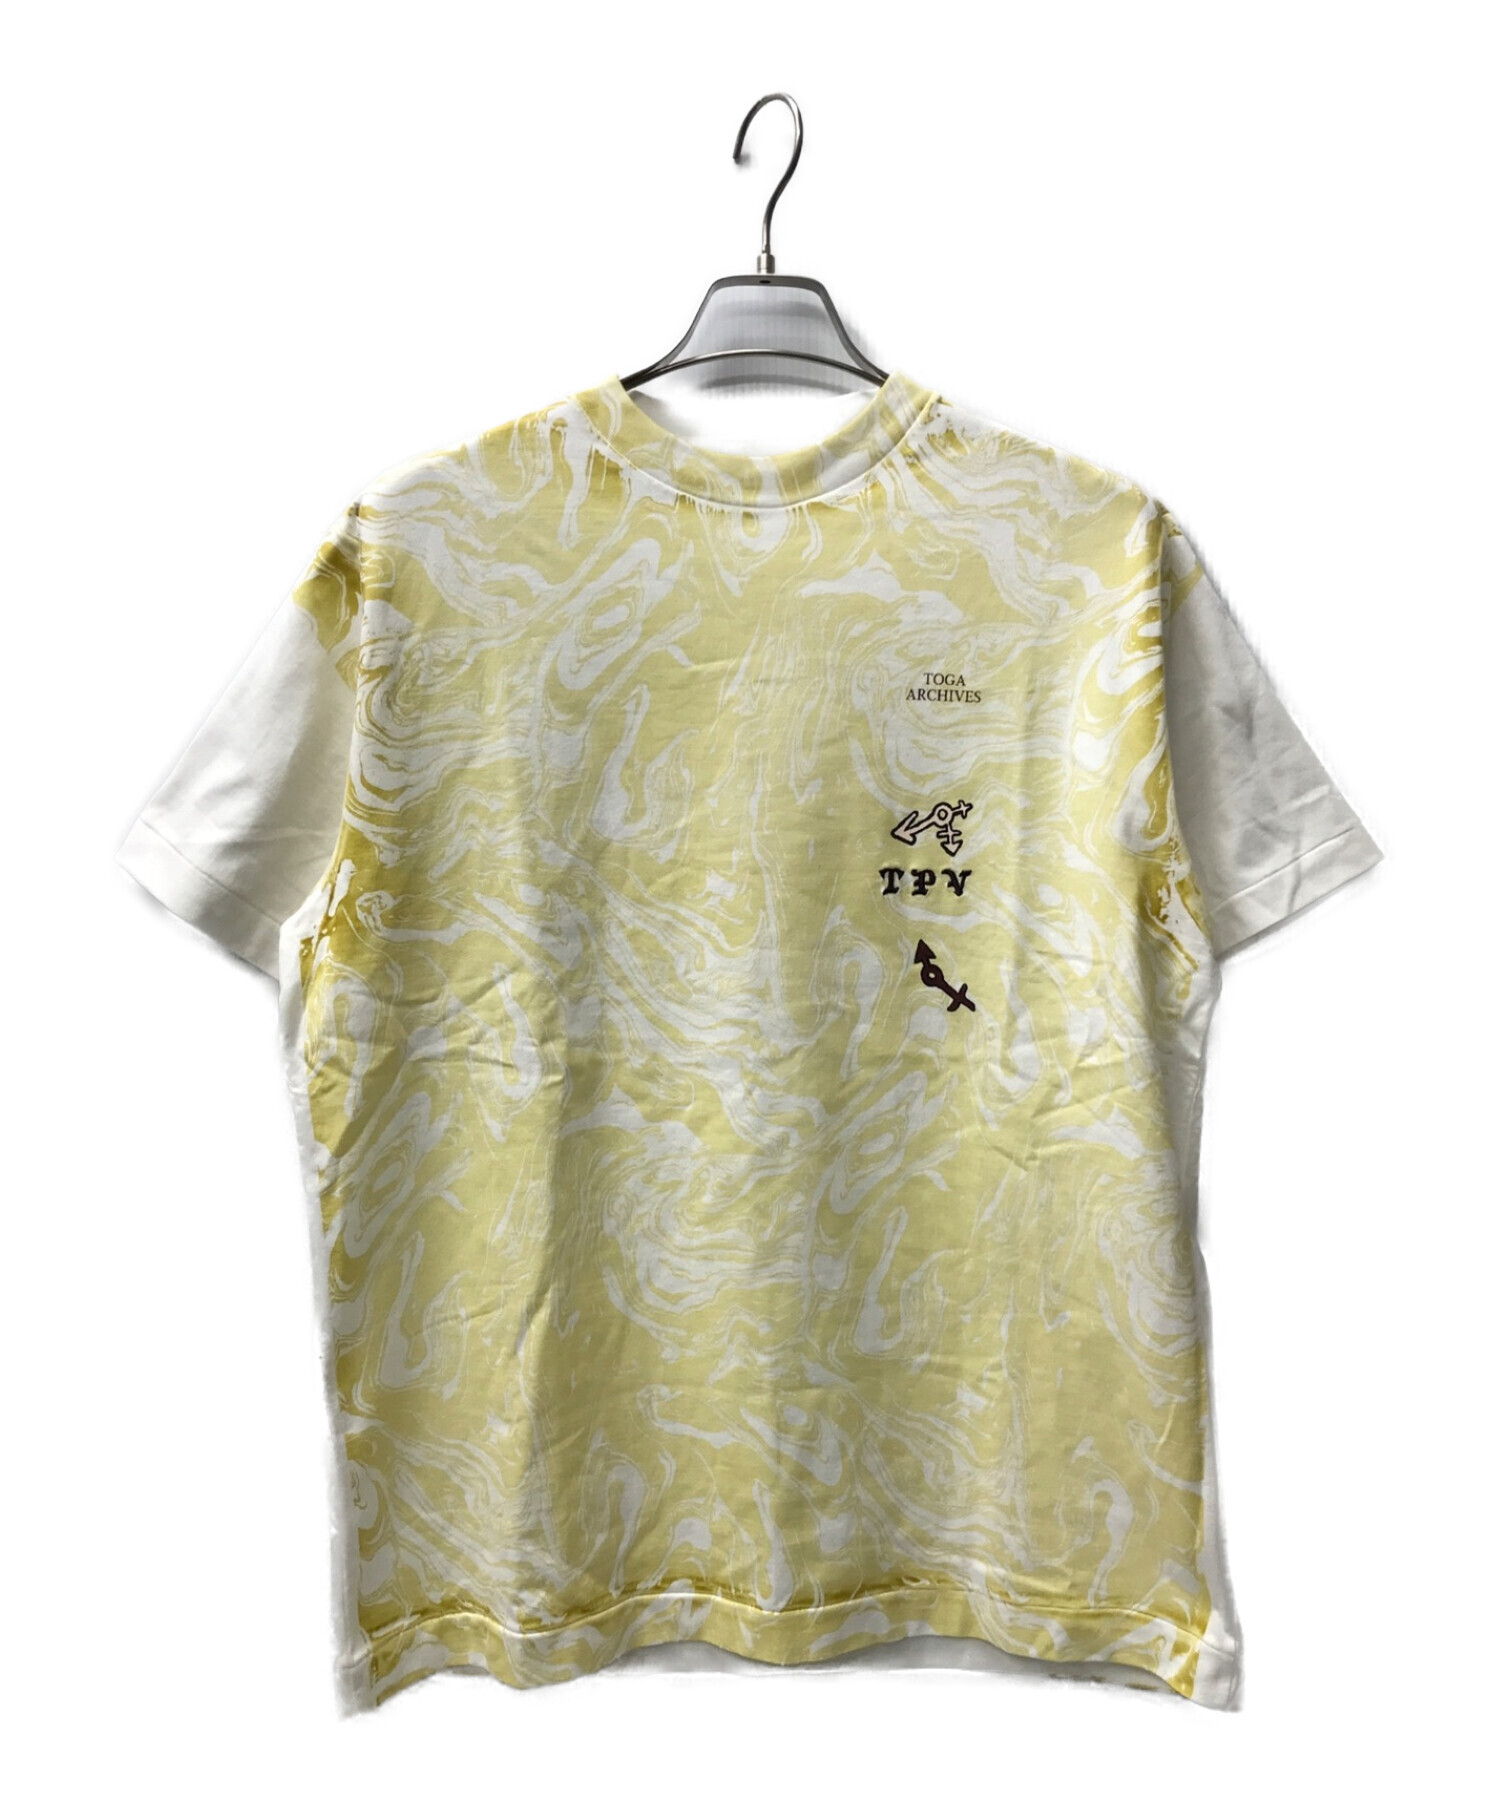 TOGA ARCHIVES (トーガアーカイブス) Marble print T-shirt イエロー サイズ:M